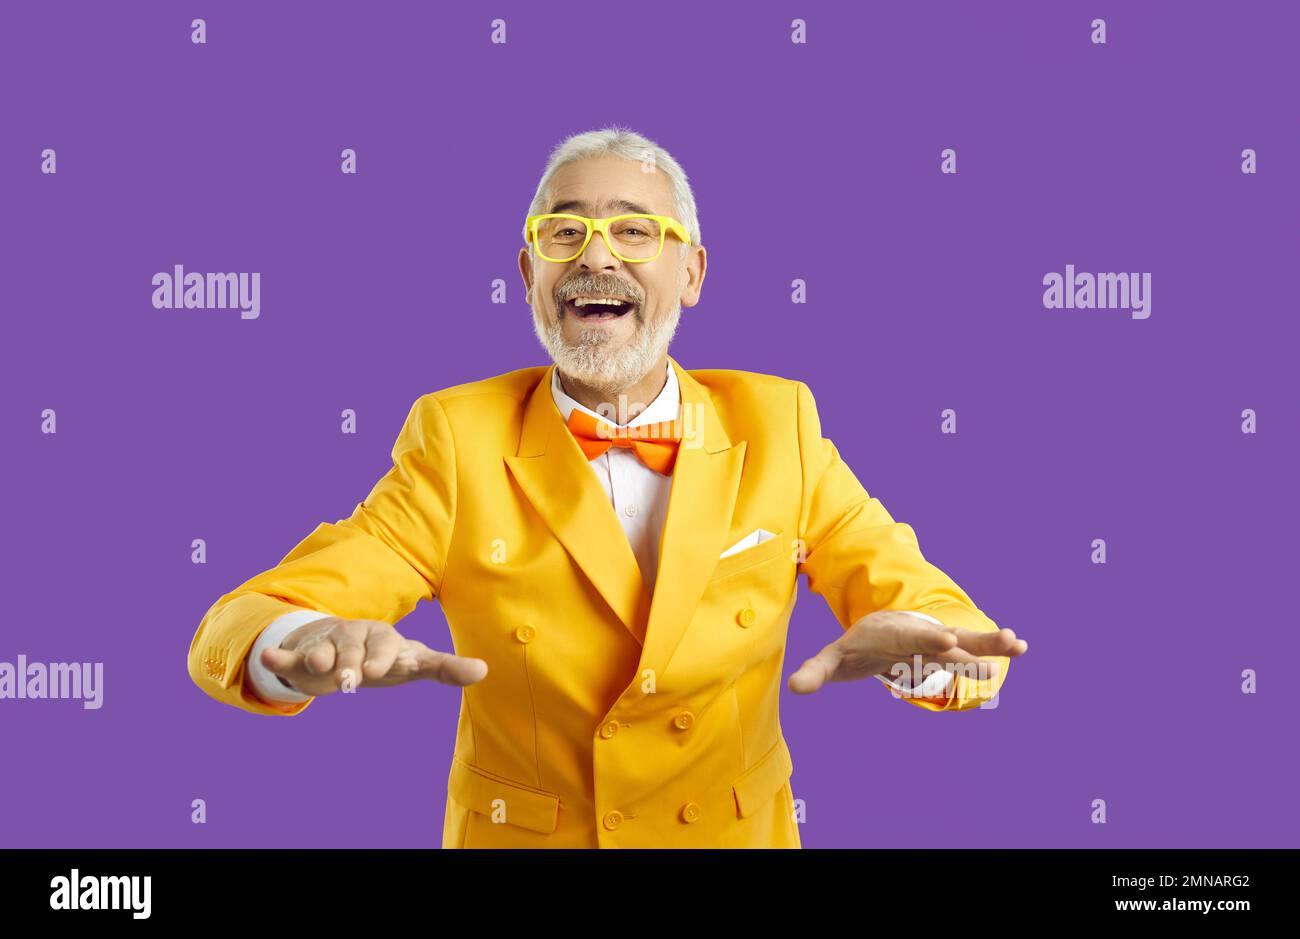 Funny senior man in suit on violet studio background Stock Photo